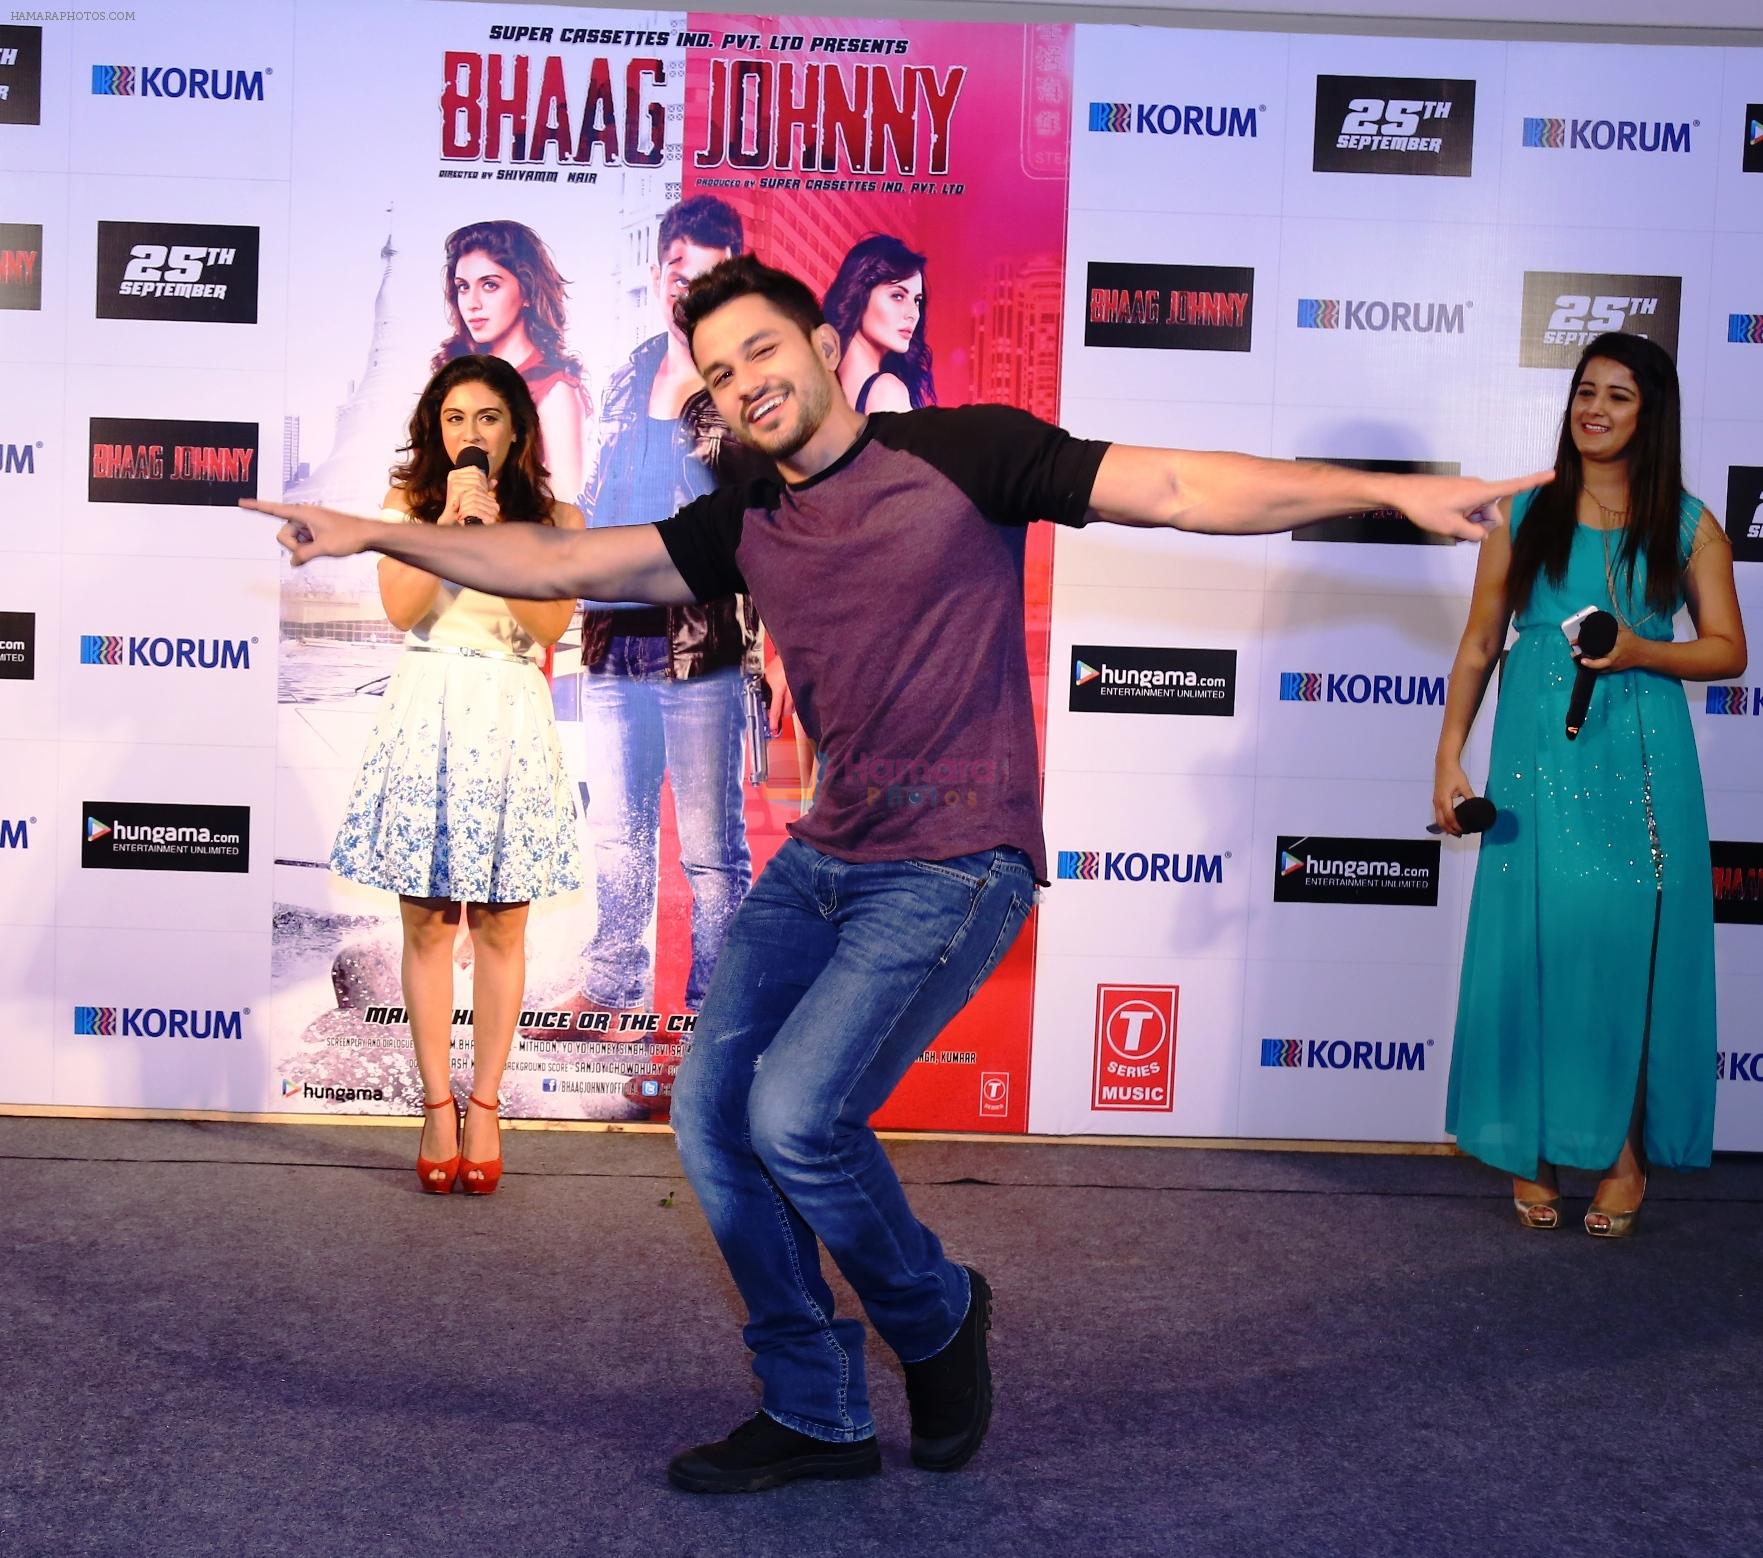 Kunal Khemu and Zoa Morani promoting Bhaag Johnny in KORUM Mall, Thane on 21st Sept 2015